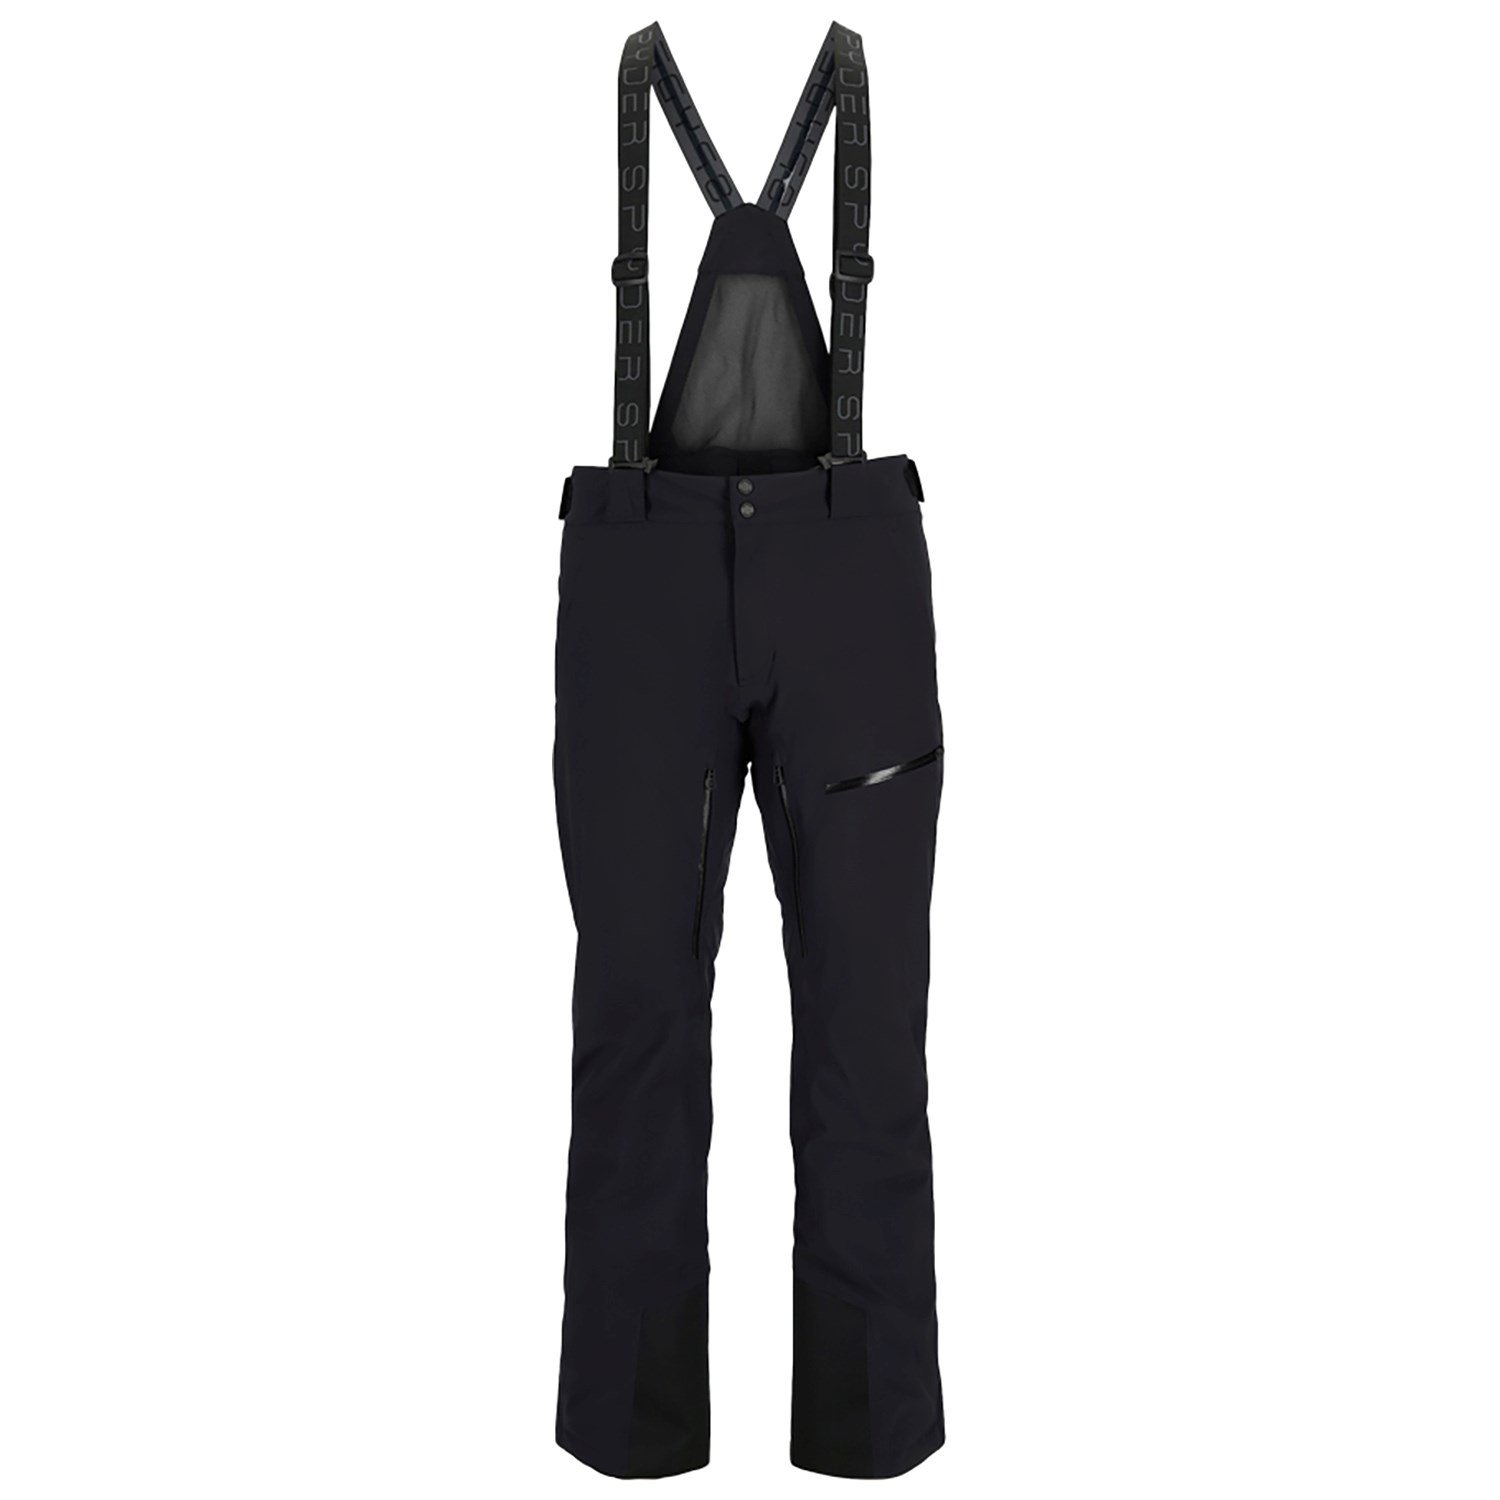 Spyder, Pants & Jumpsuits, Spyder Ladies Legging With Pockets Size S  Black